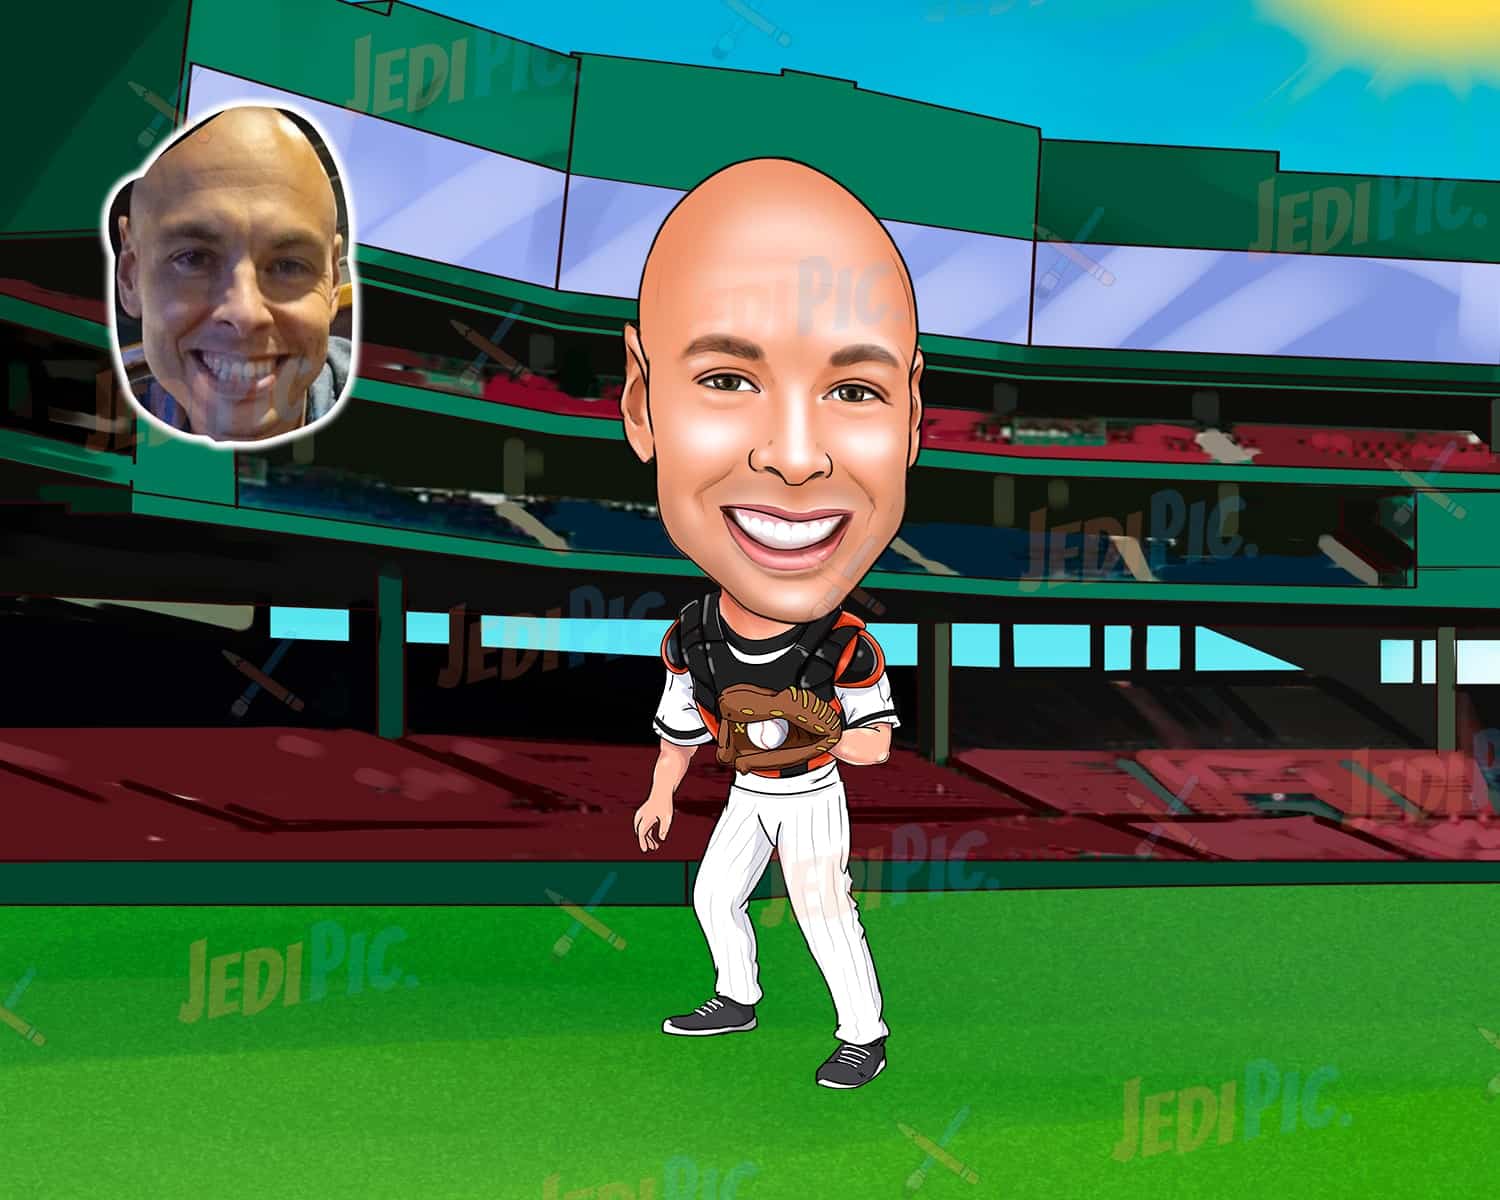 Baseball Caricature with Stadium Background